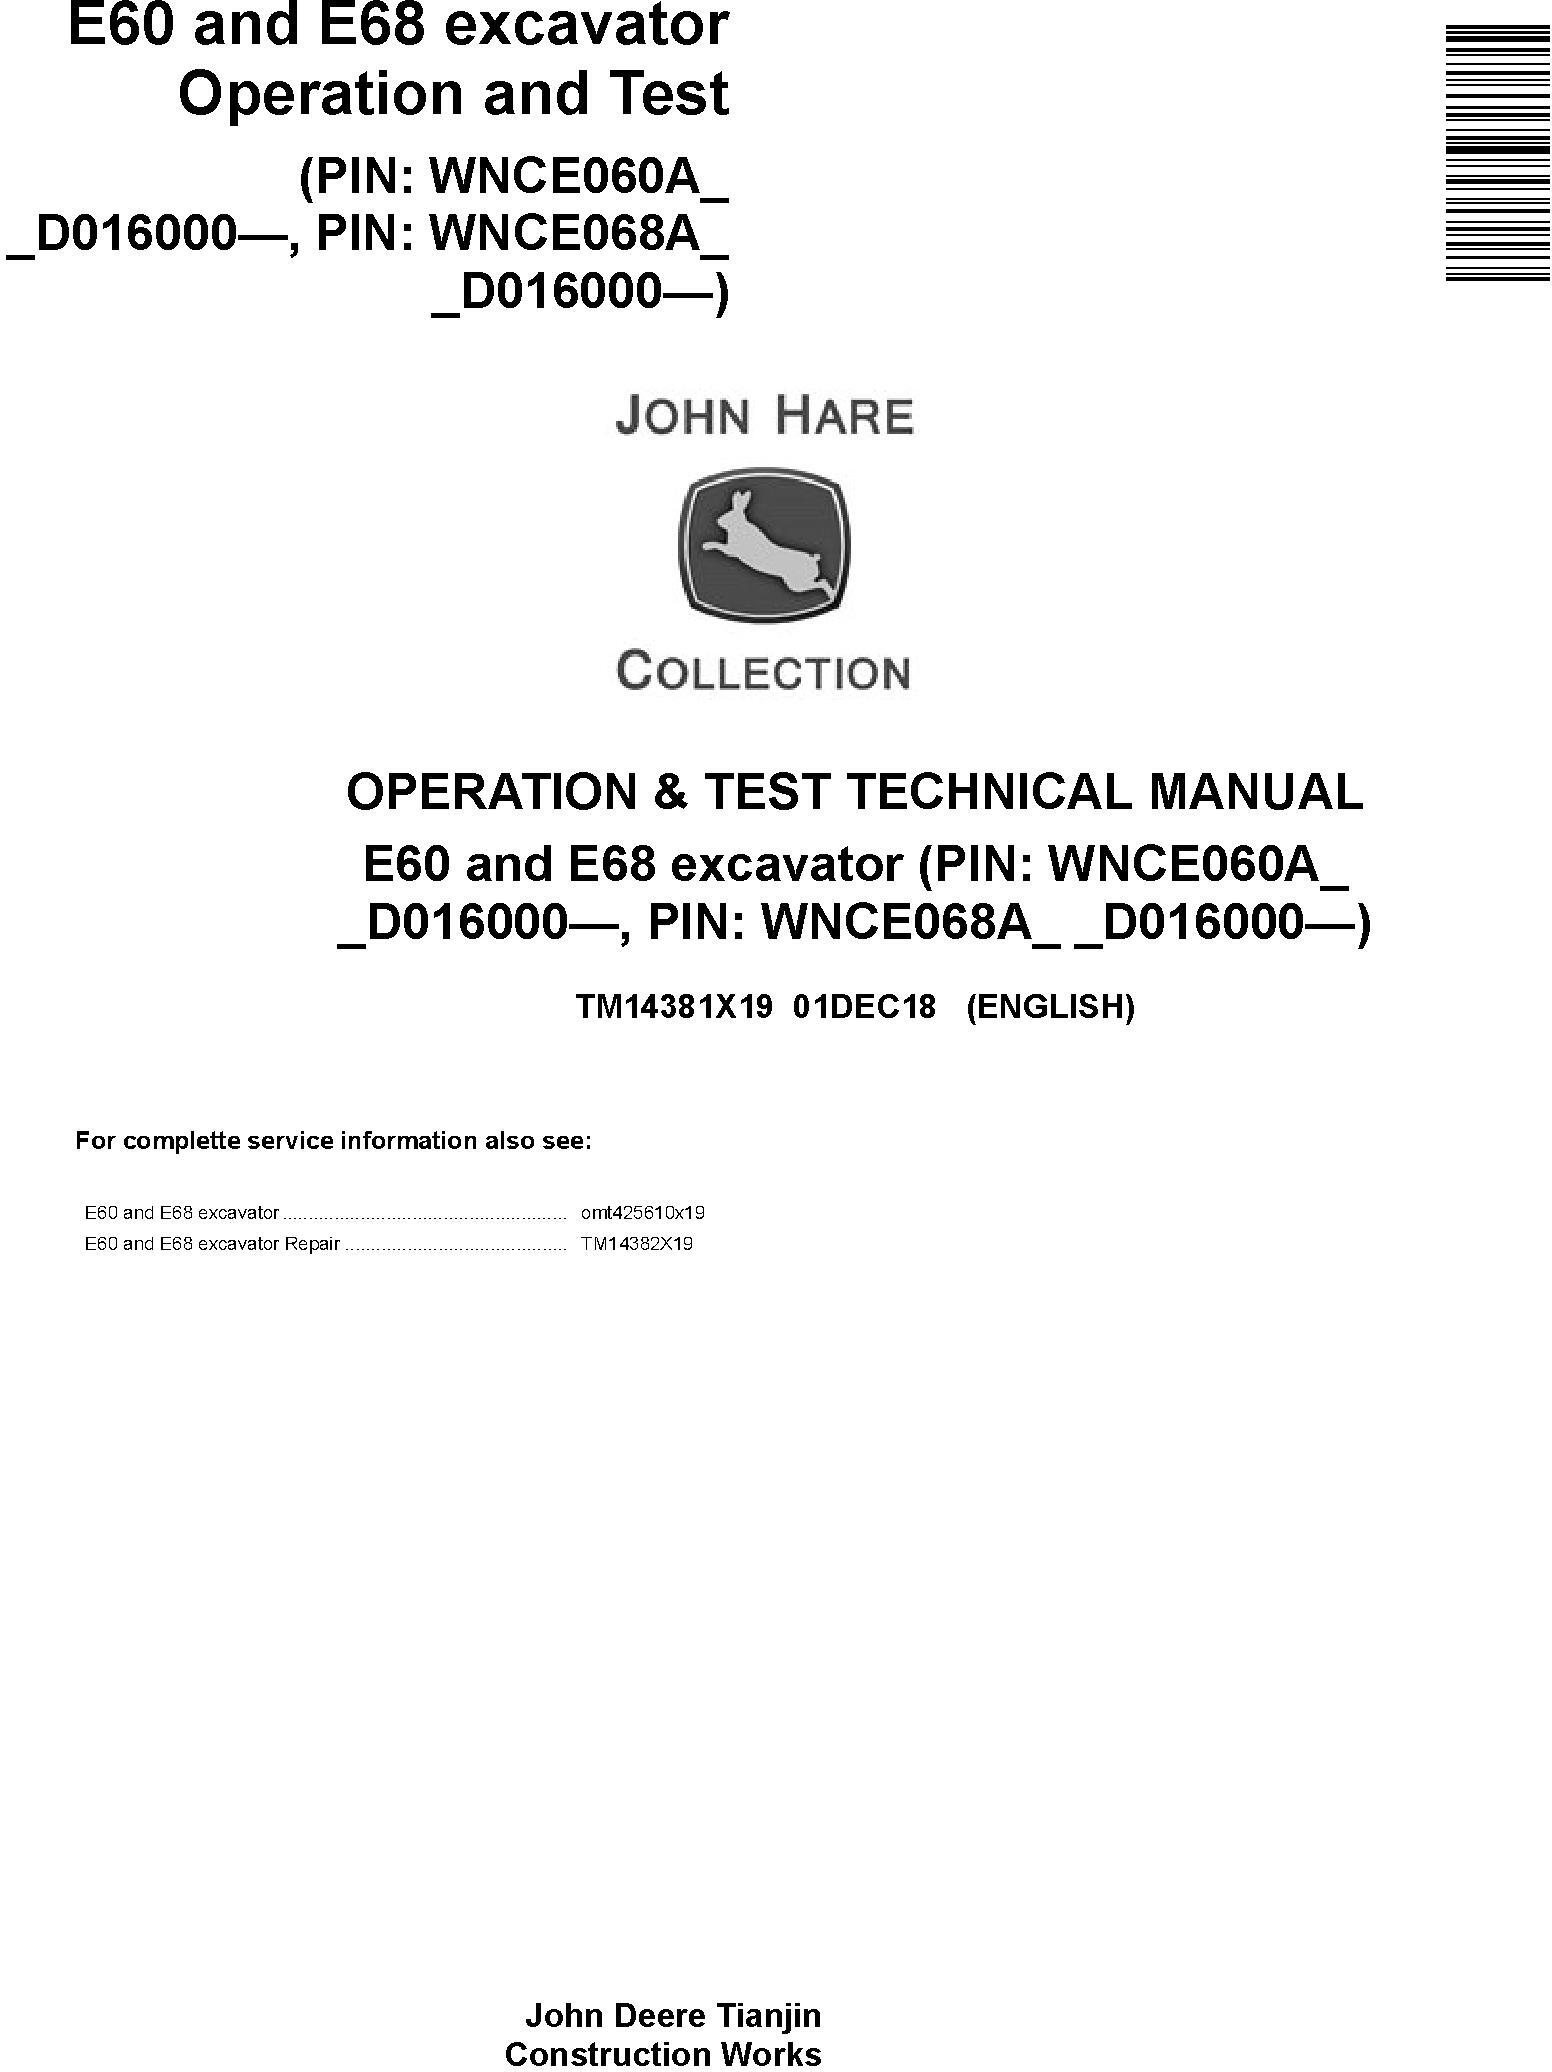 John Deere E60, E68 (SN. from D016000) excavator Operation & Test Technical Manual (TM14381X19) - 19162